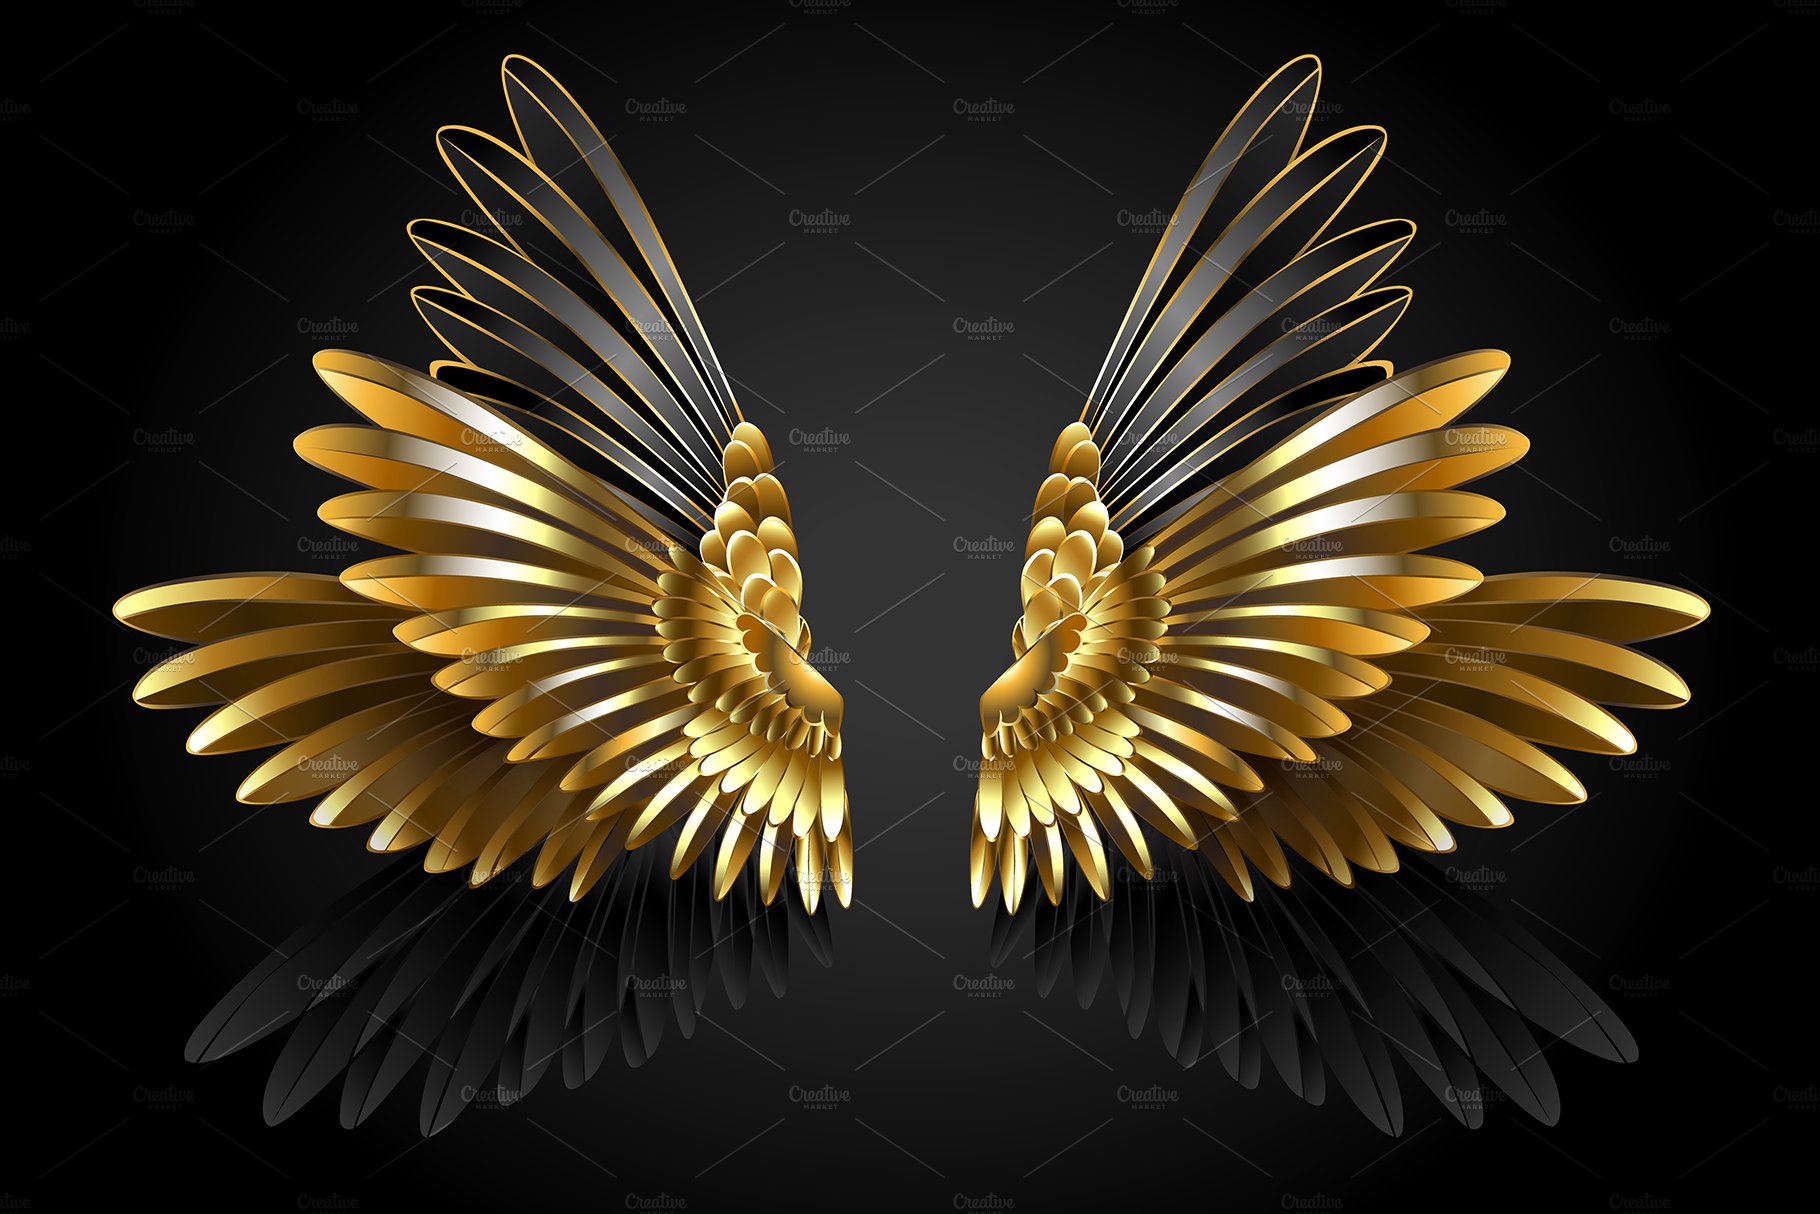 Golden Wings Hummingbird cover image.